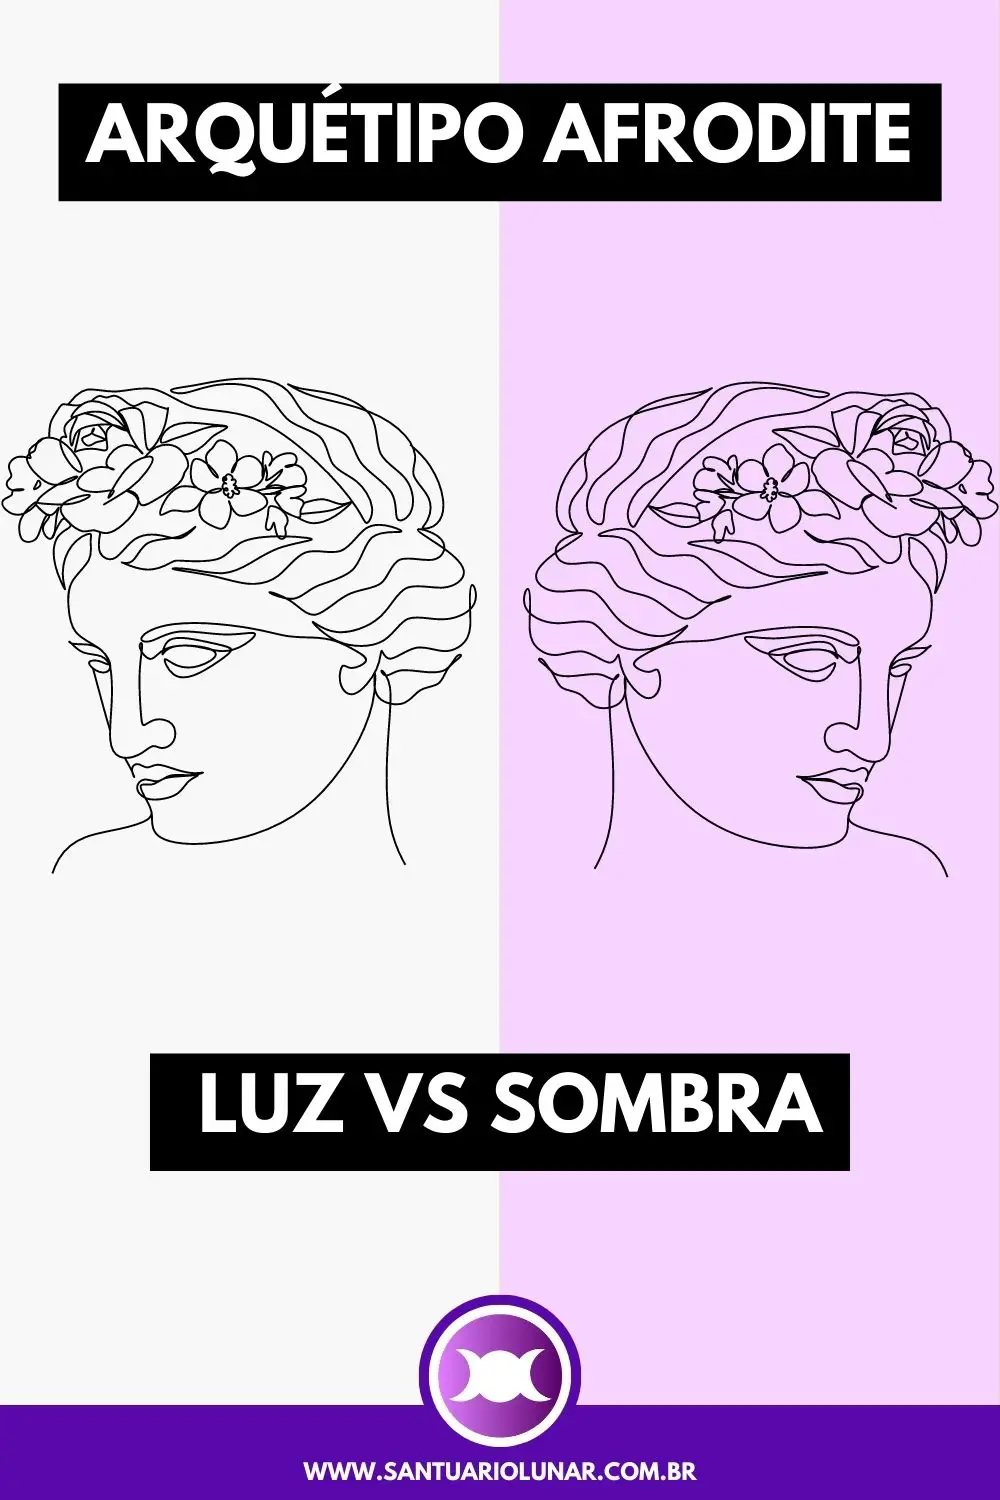 Arquétipo Afrodite Luz vs Sombra